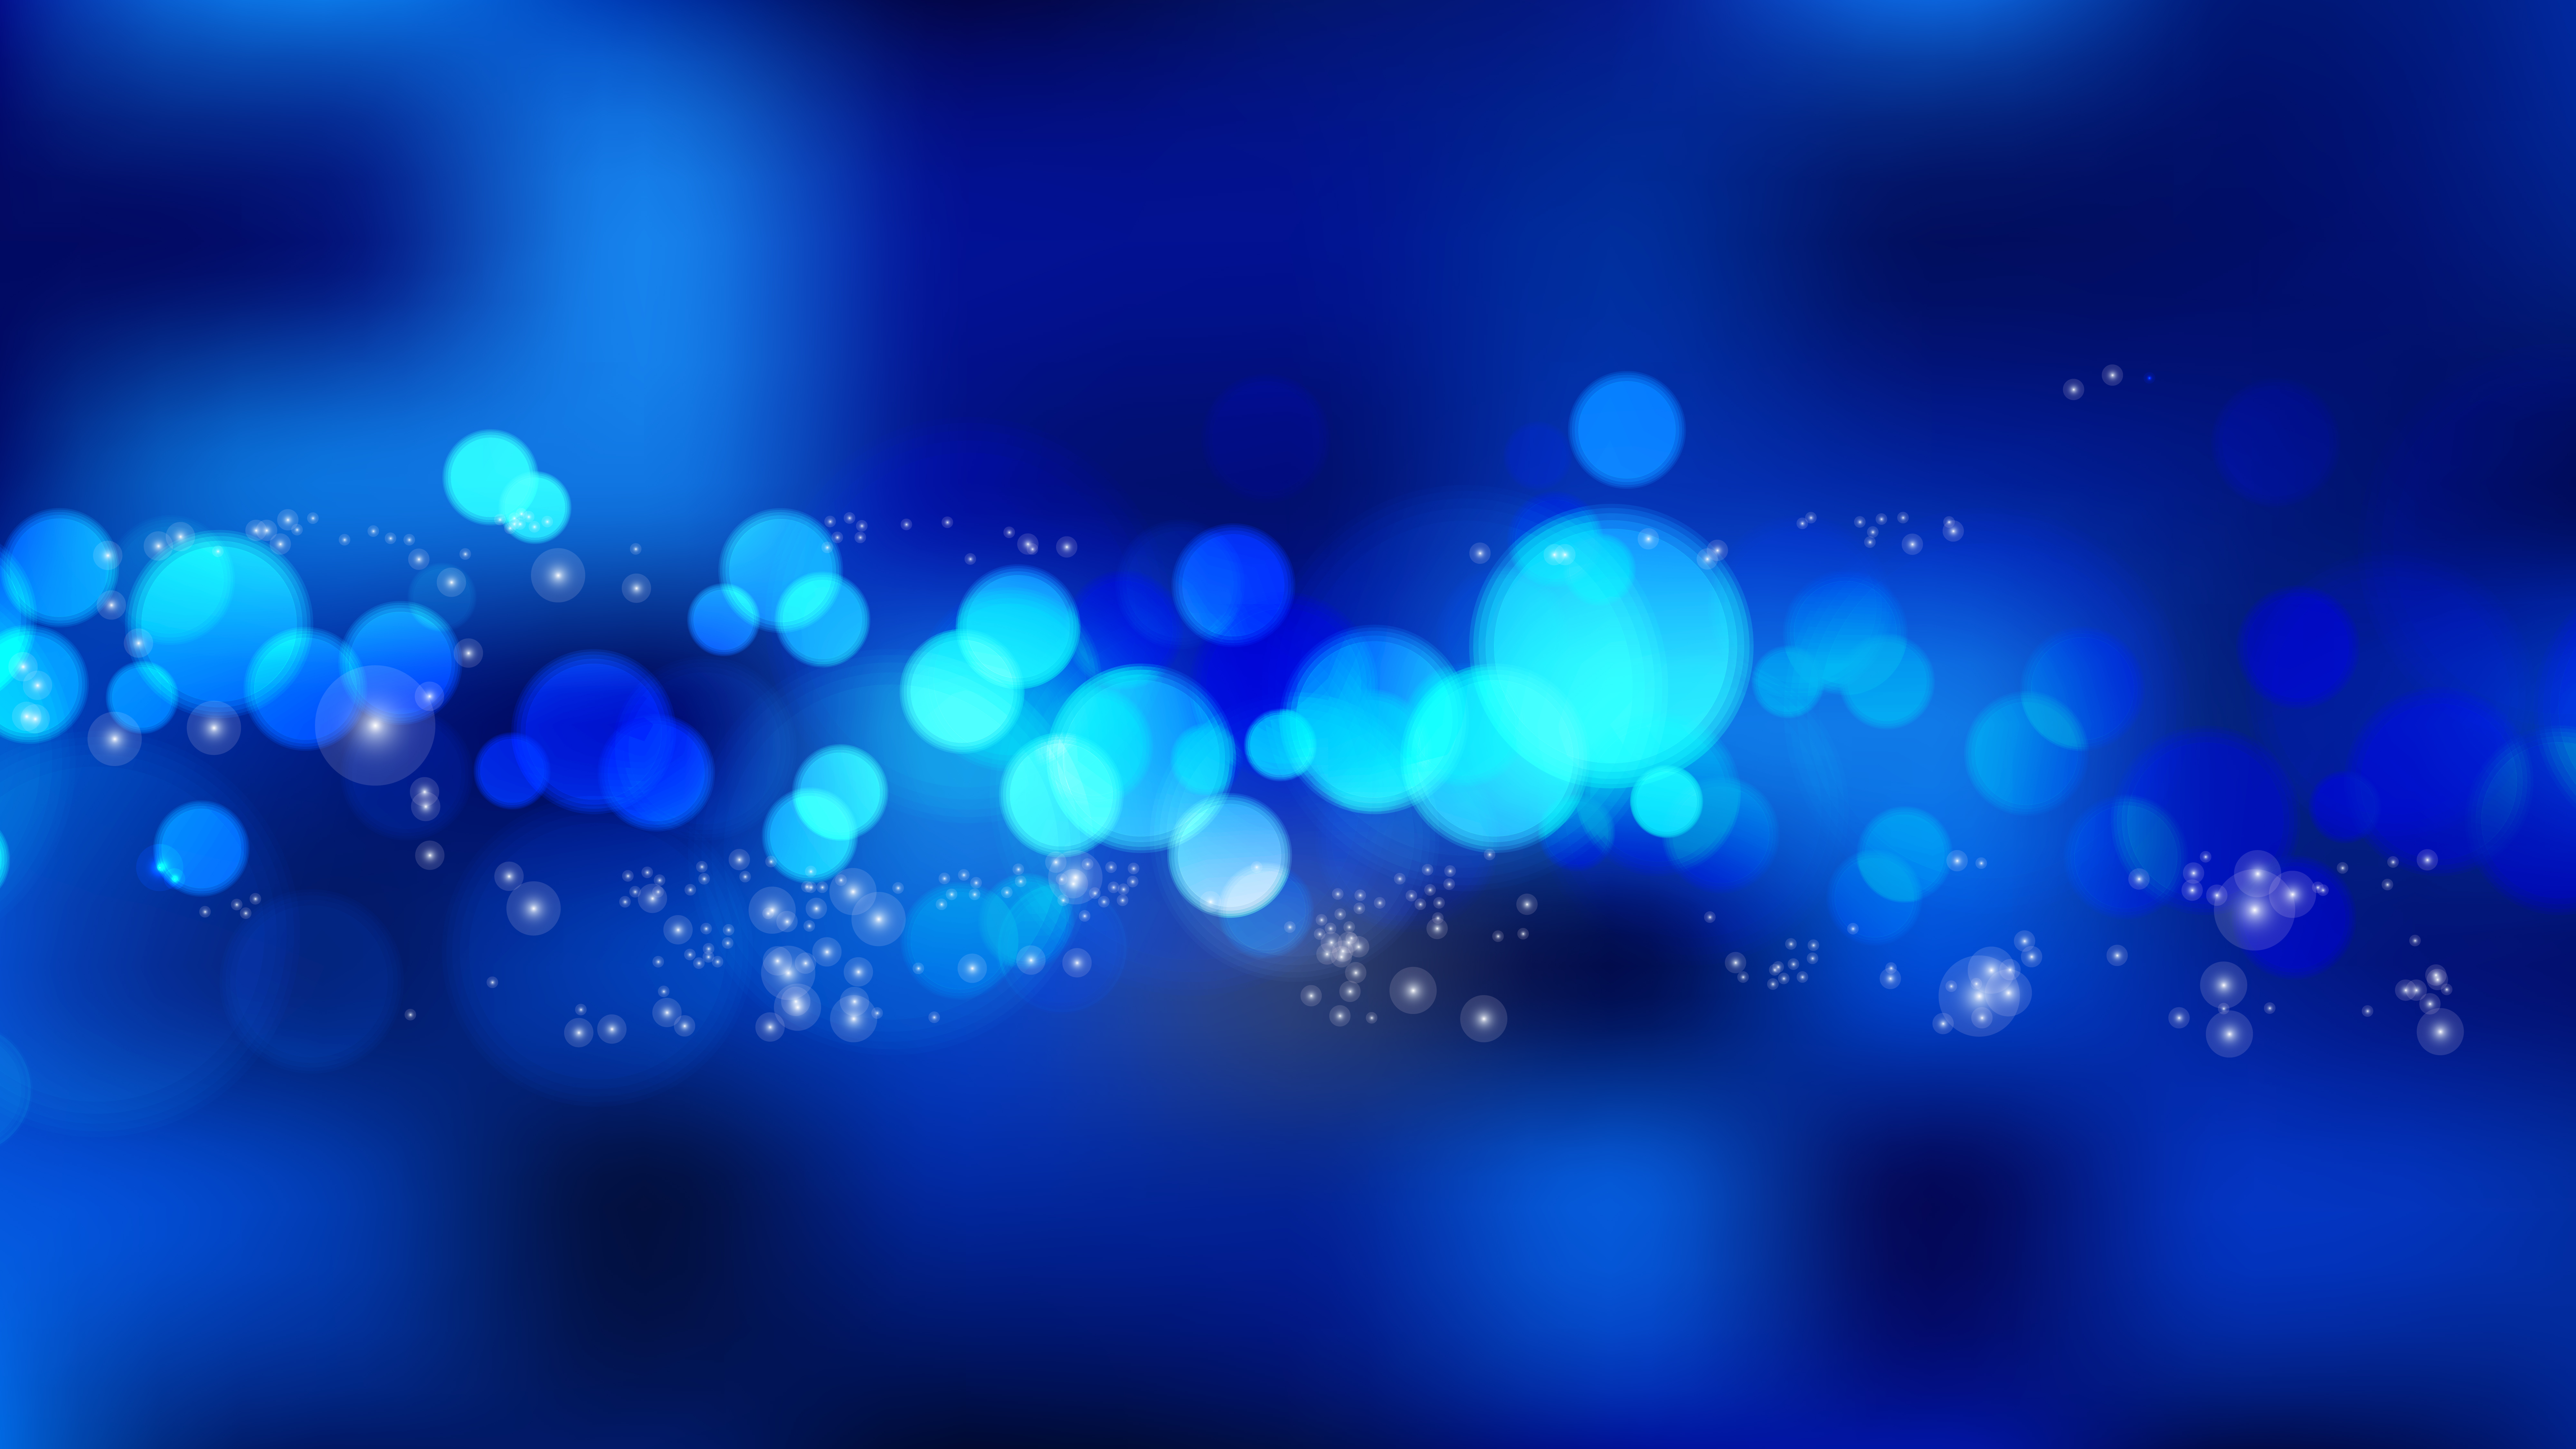 Abstract Dark Blue Blurred Lights Background Illustrator